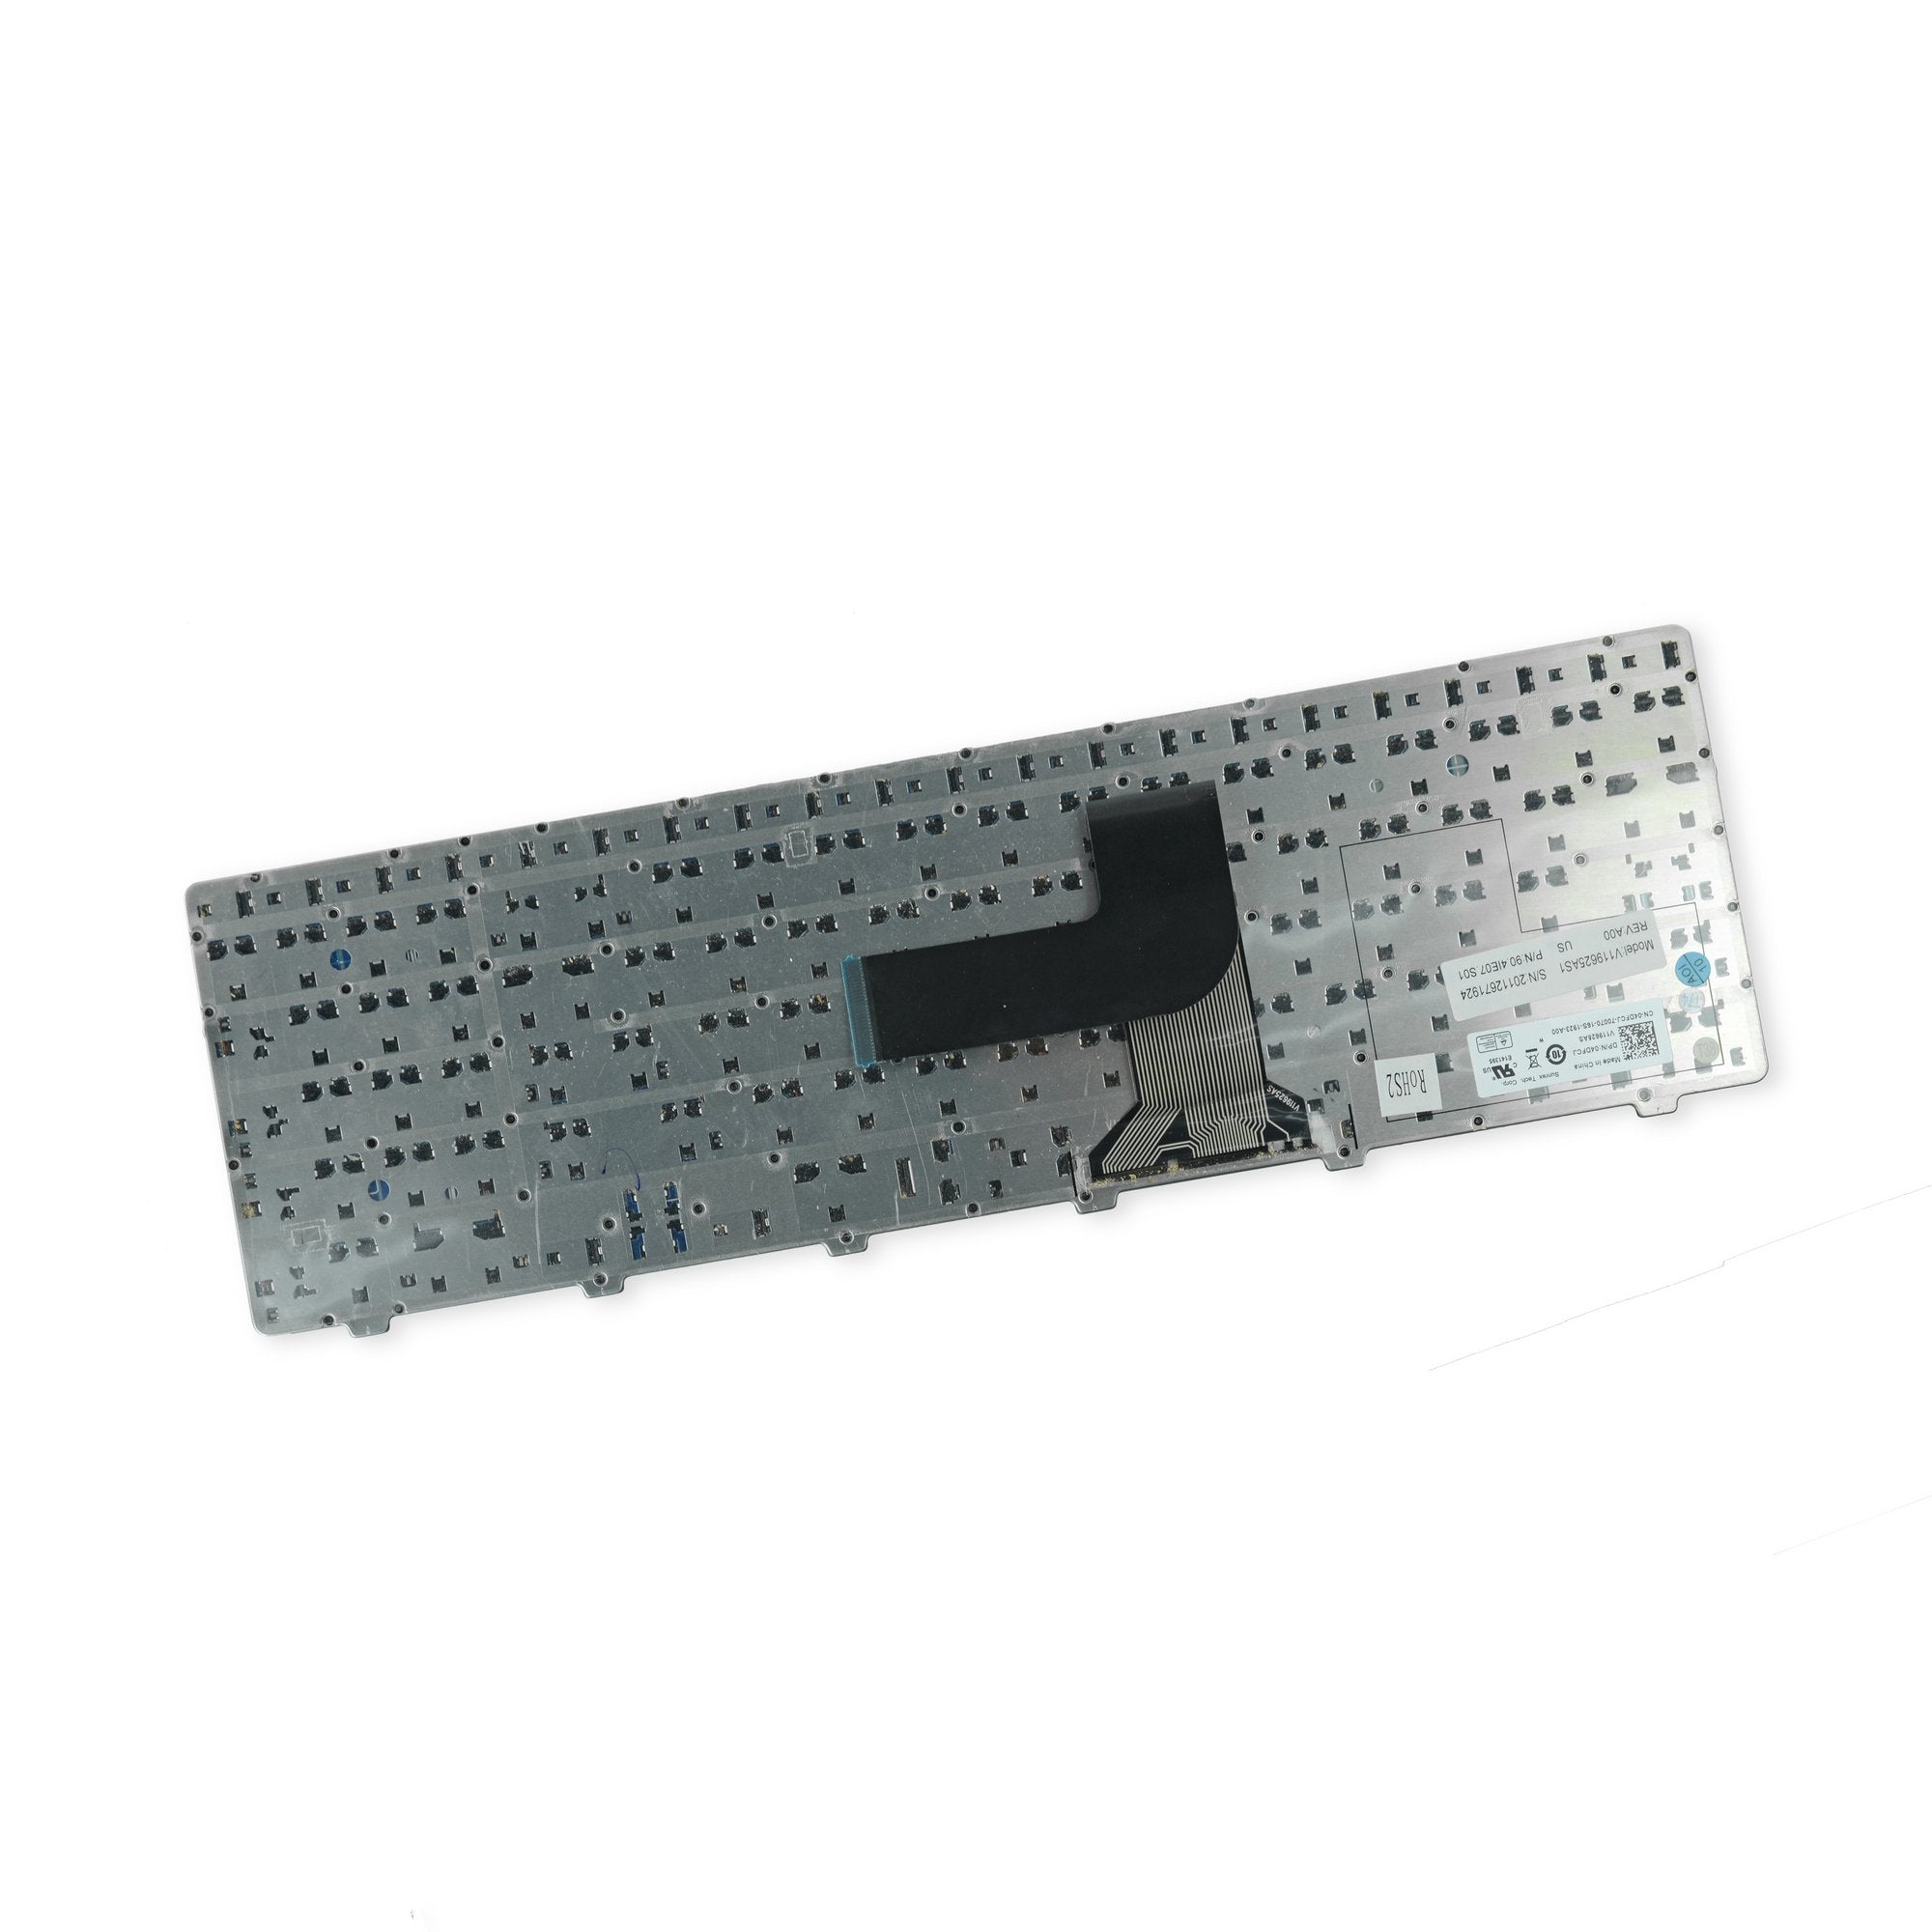 Dell Inspiron 17R (5721) Keyboard